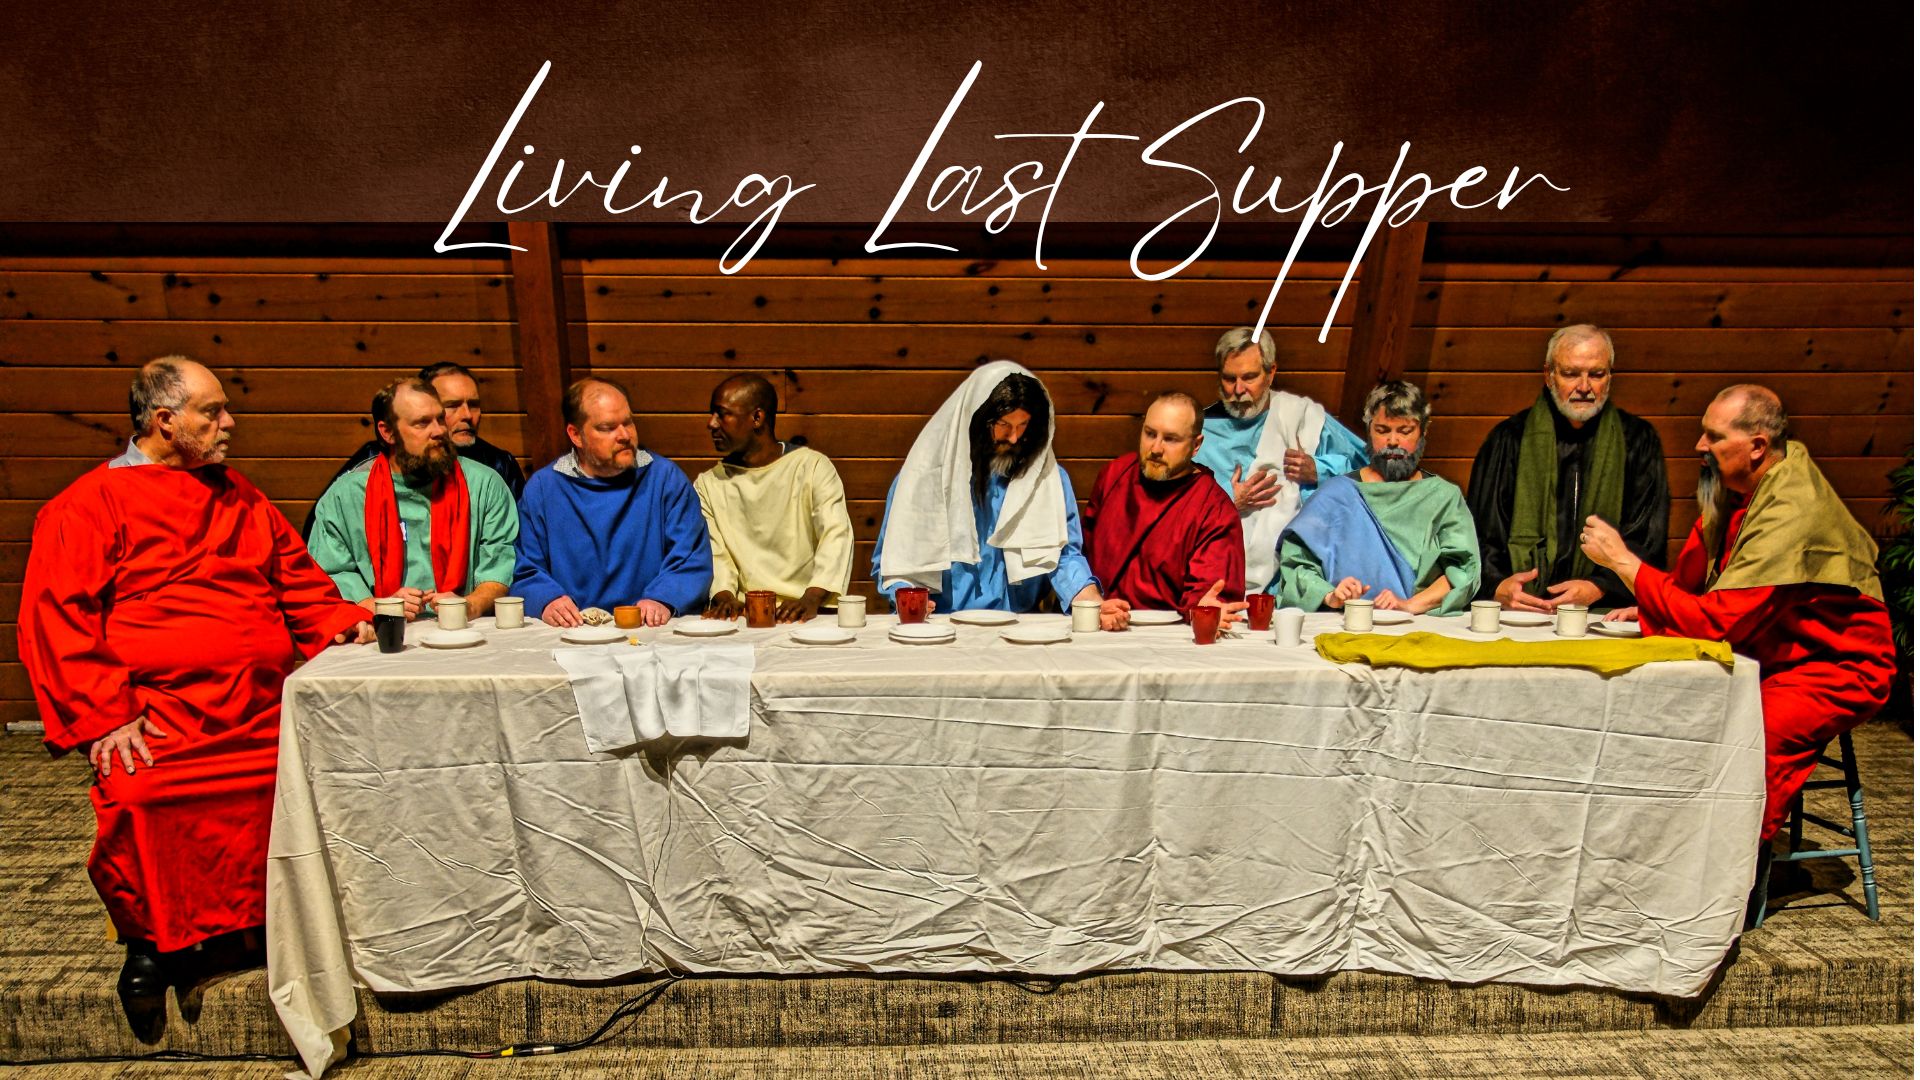 Living Last Supper